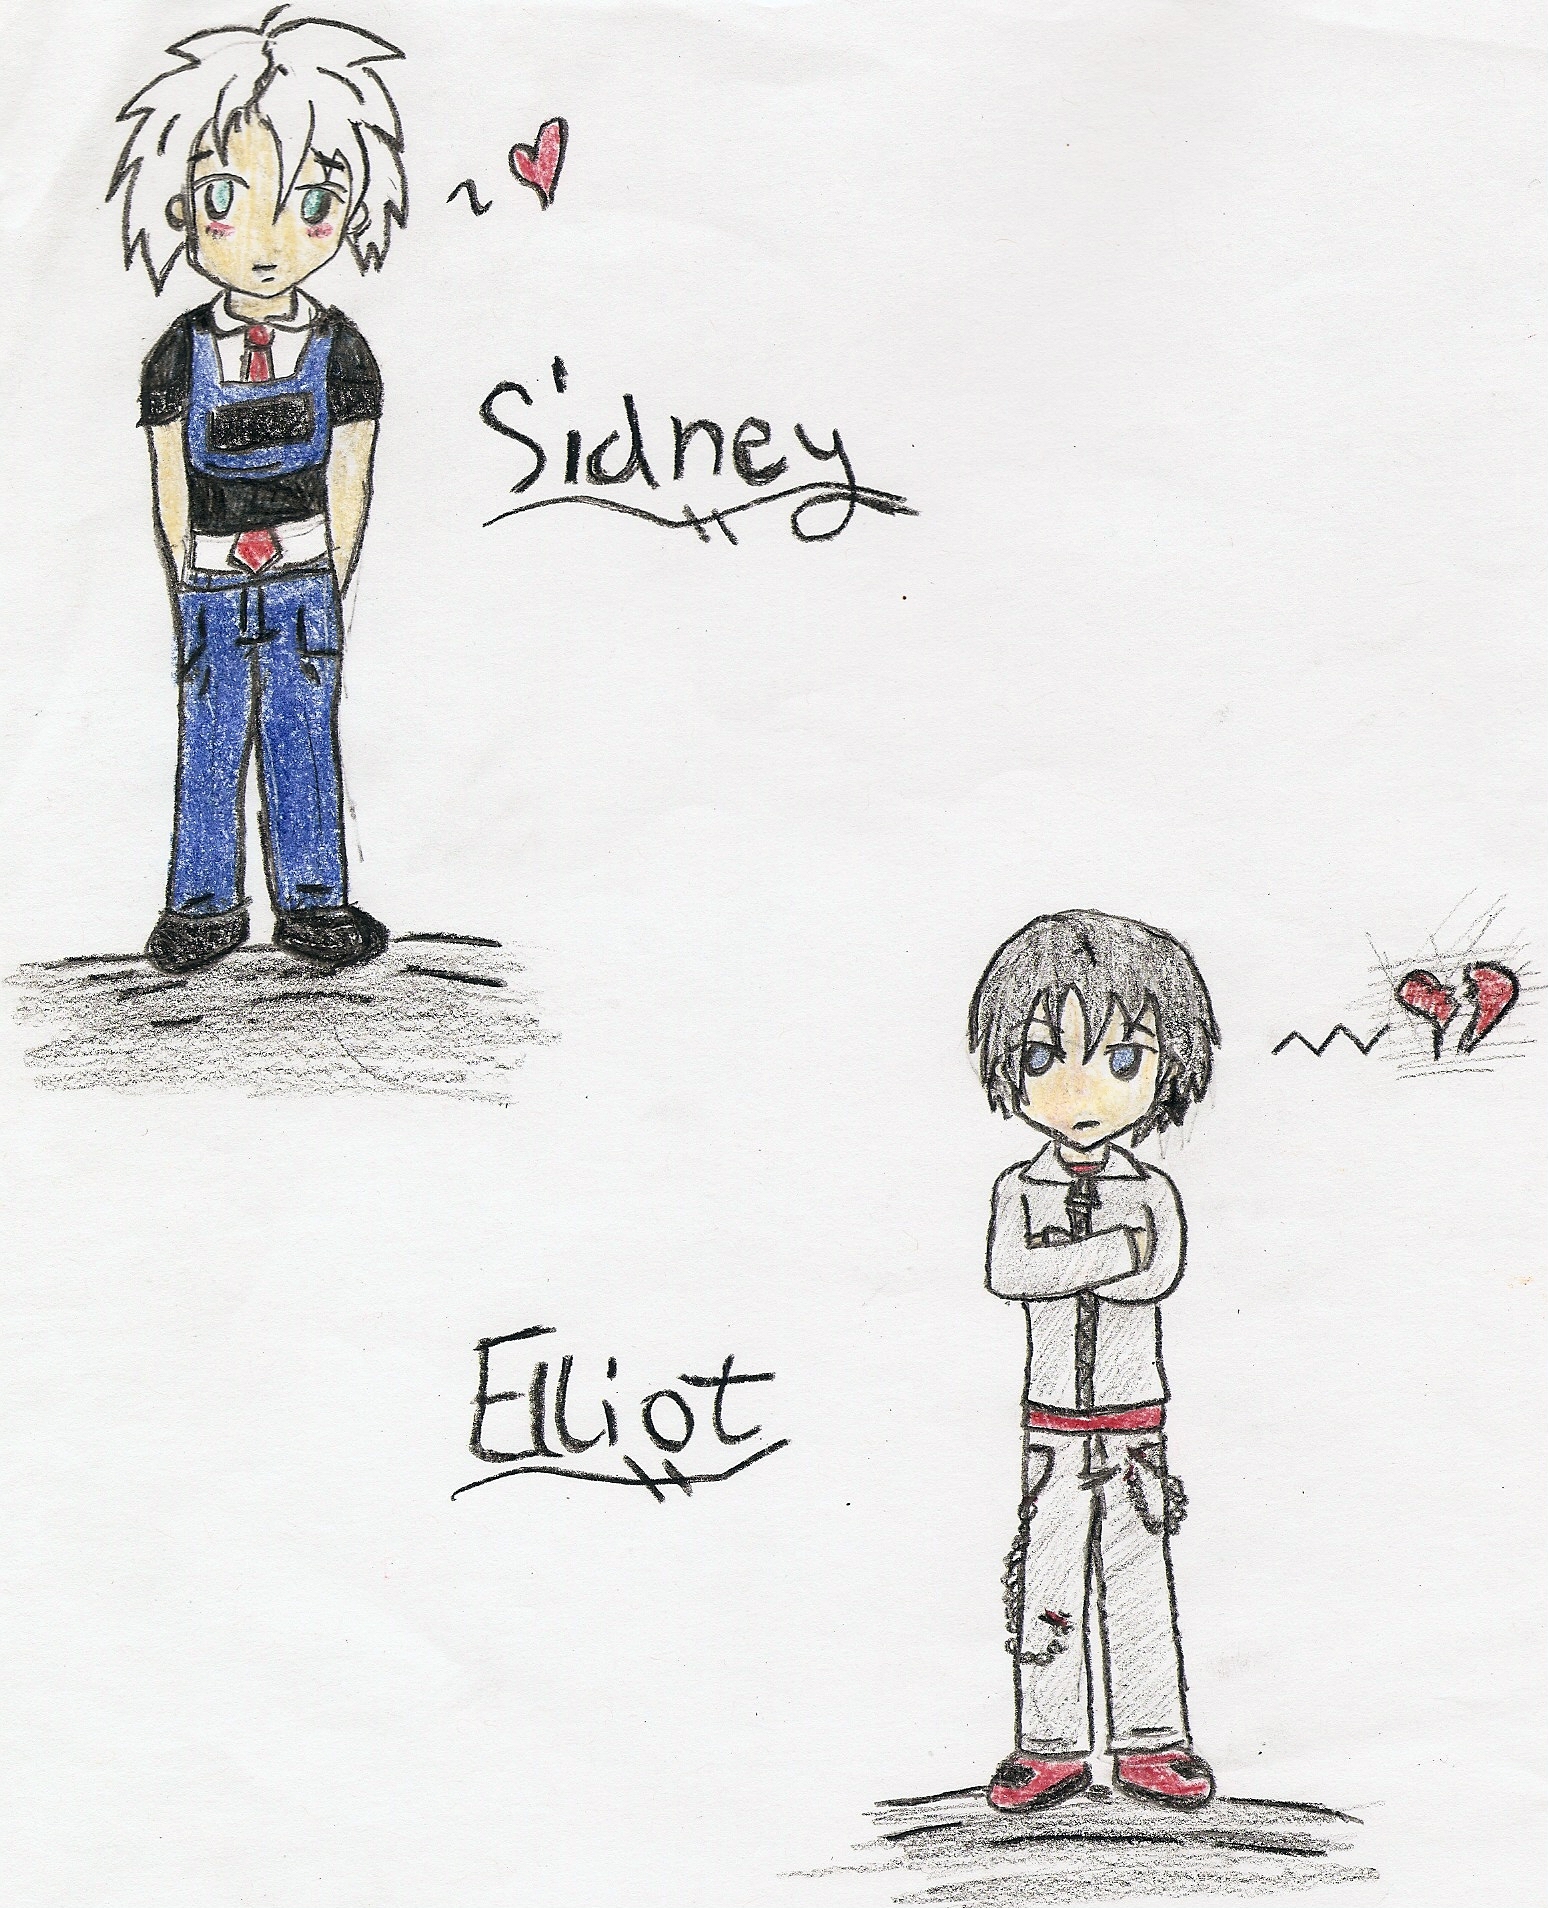 Sidney and Elliot by EjjeIceGod